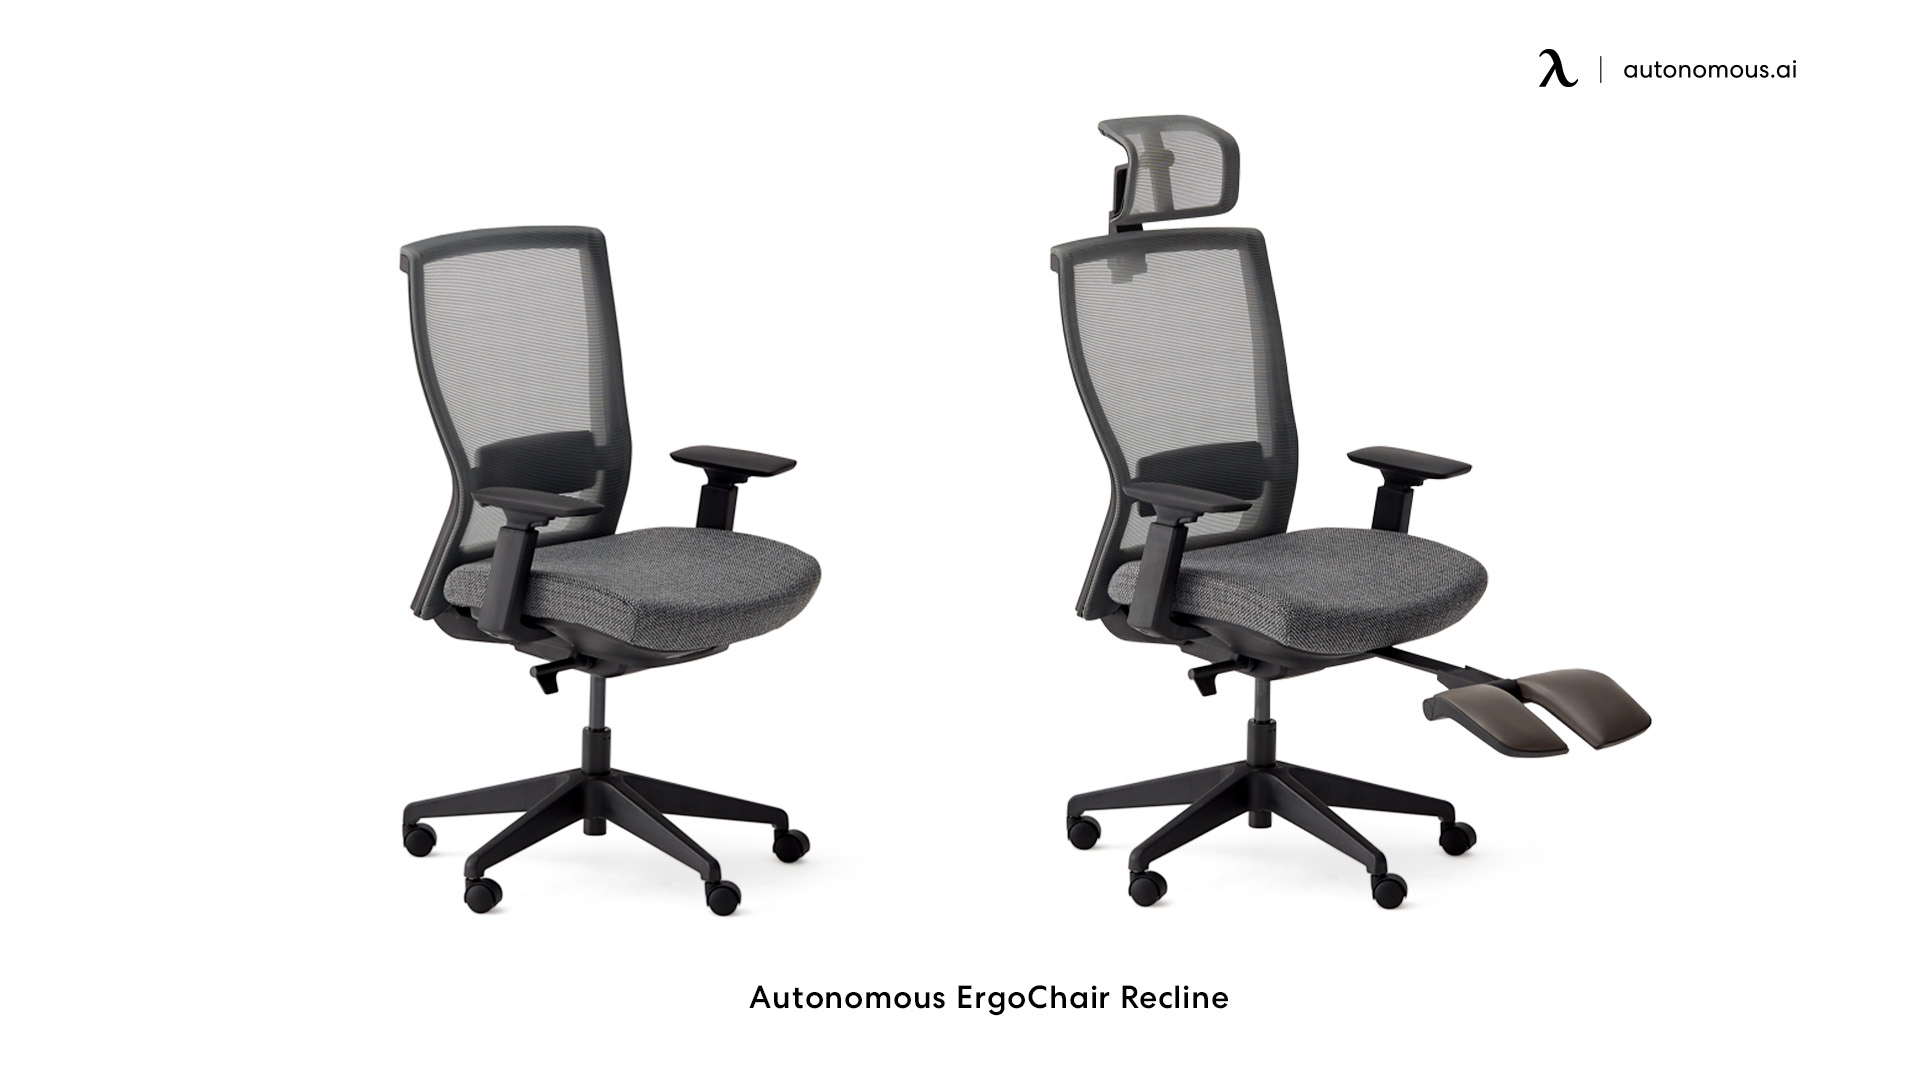 ErgoChair Recline stylish ergonomic office chair